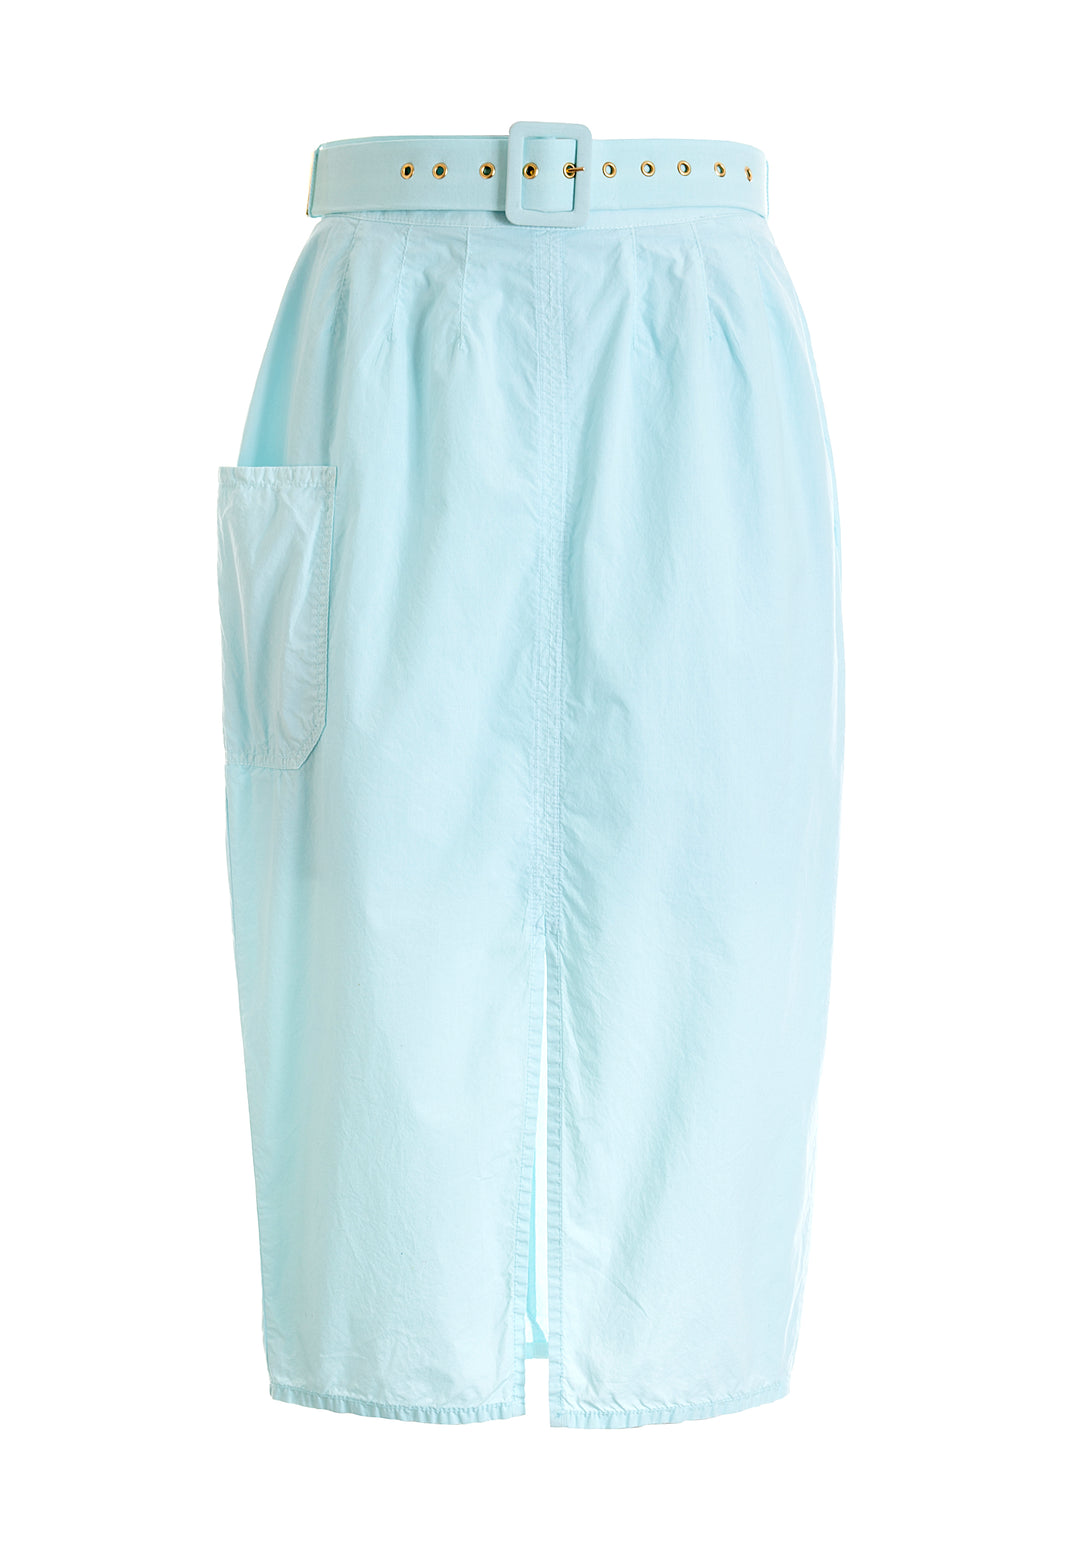 Sheath skirt slim fit made in popeline fabric